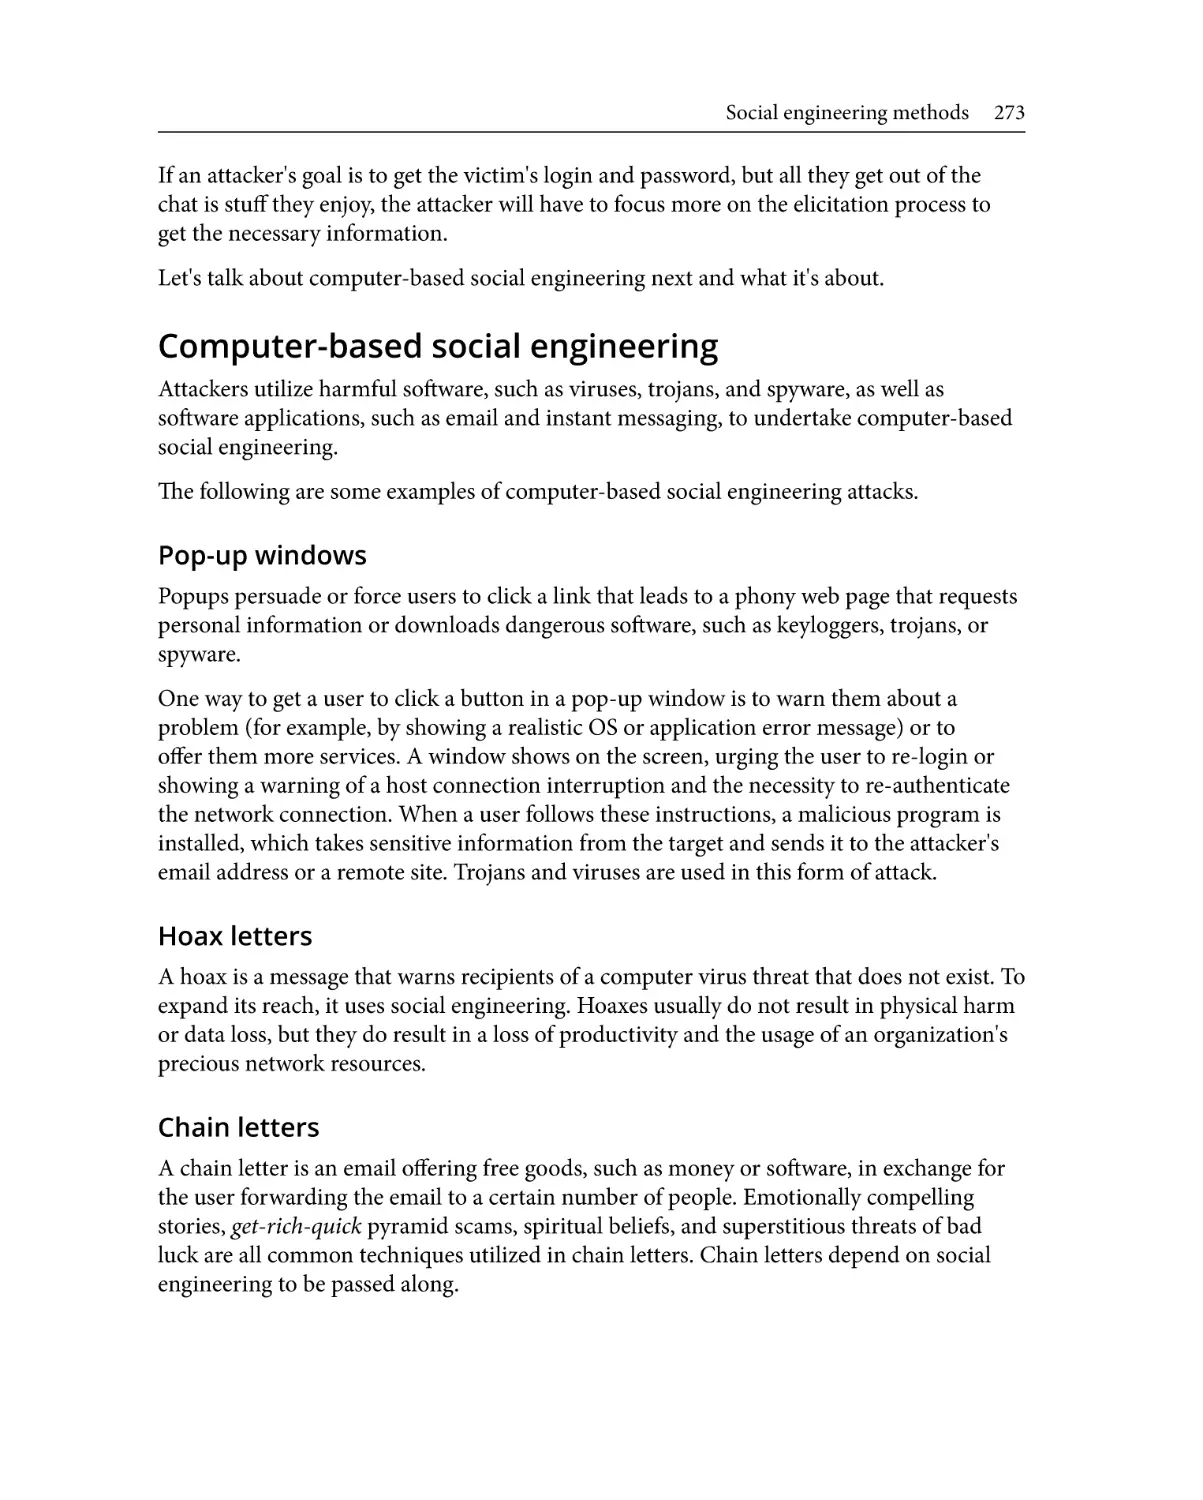 Computer-based social engineering